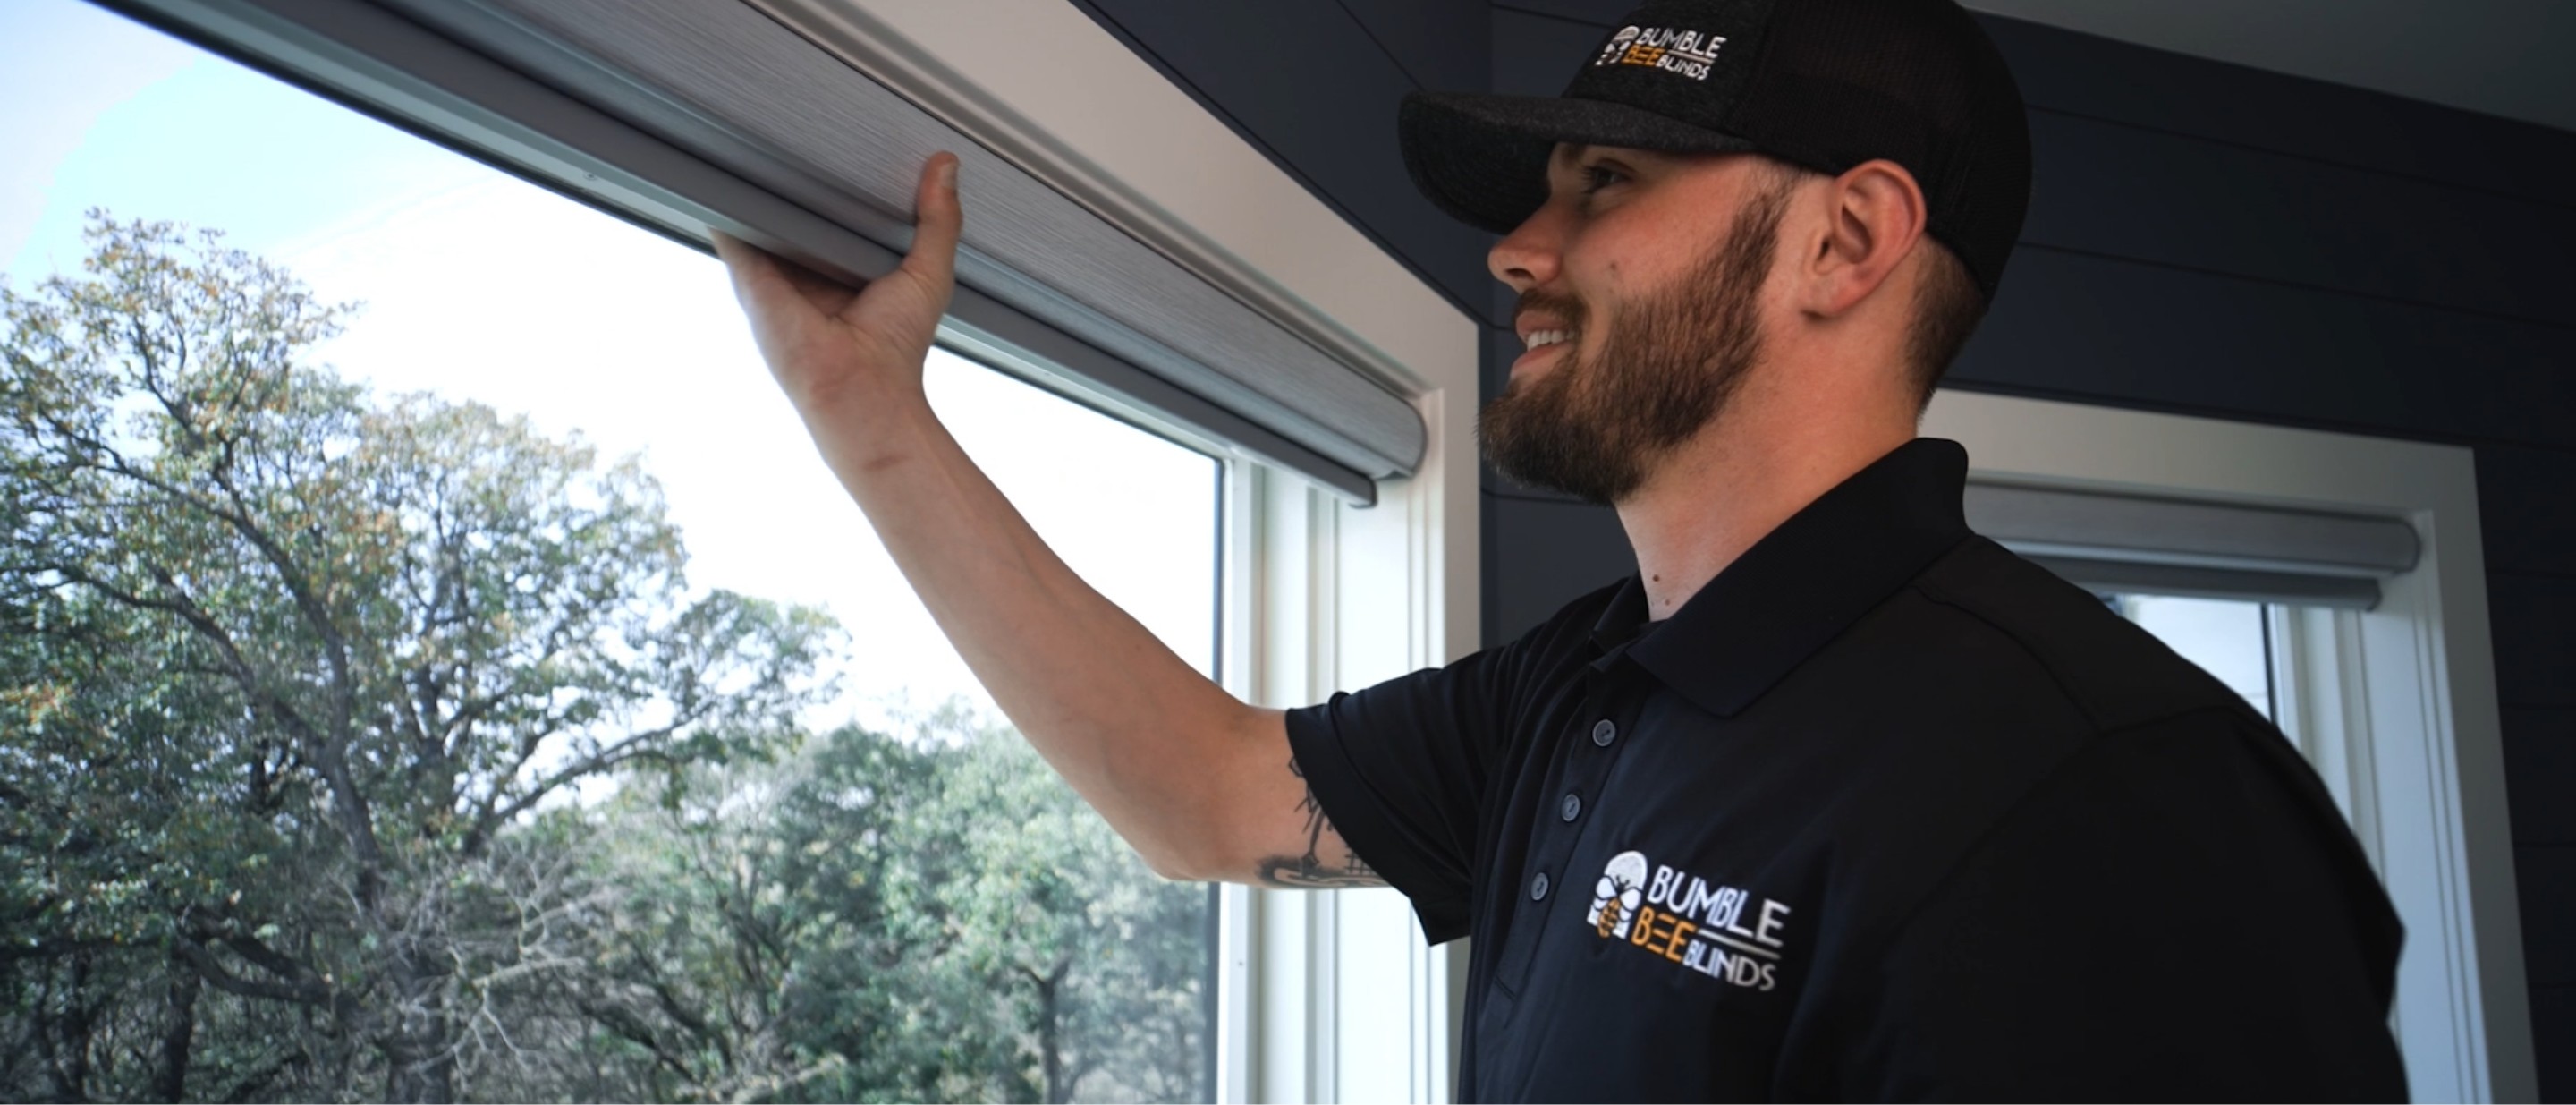 Bumble Bee Blinds technician installing shutters